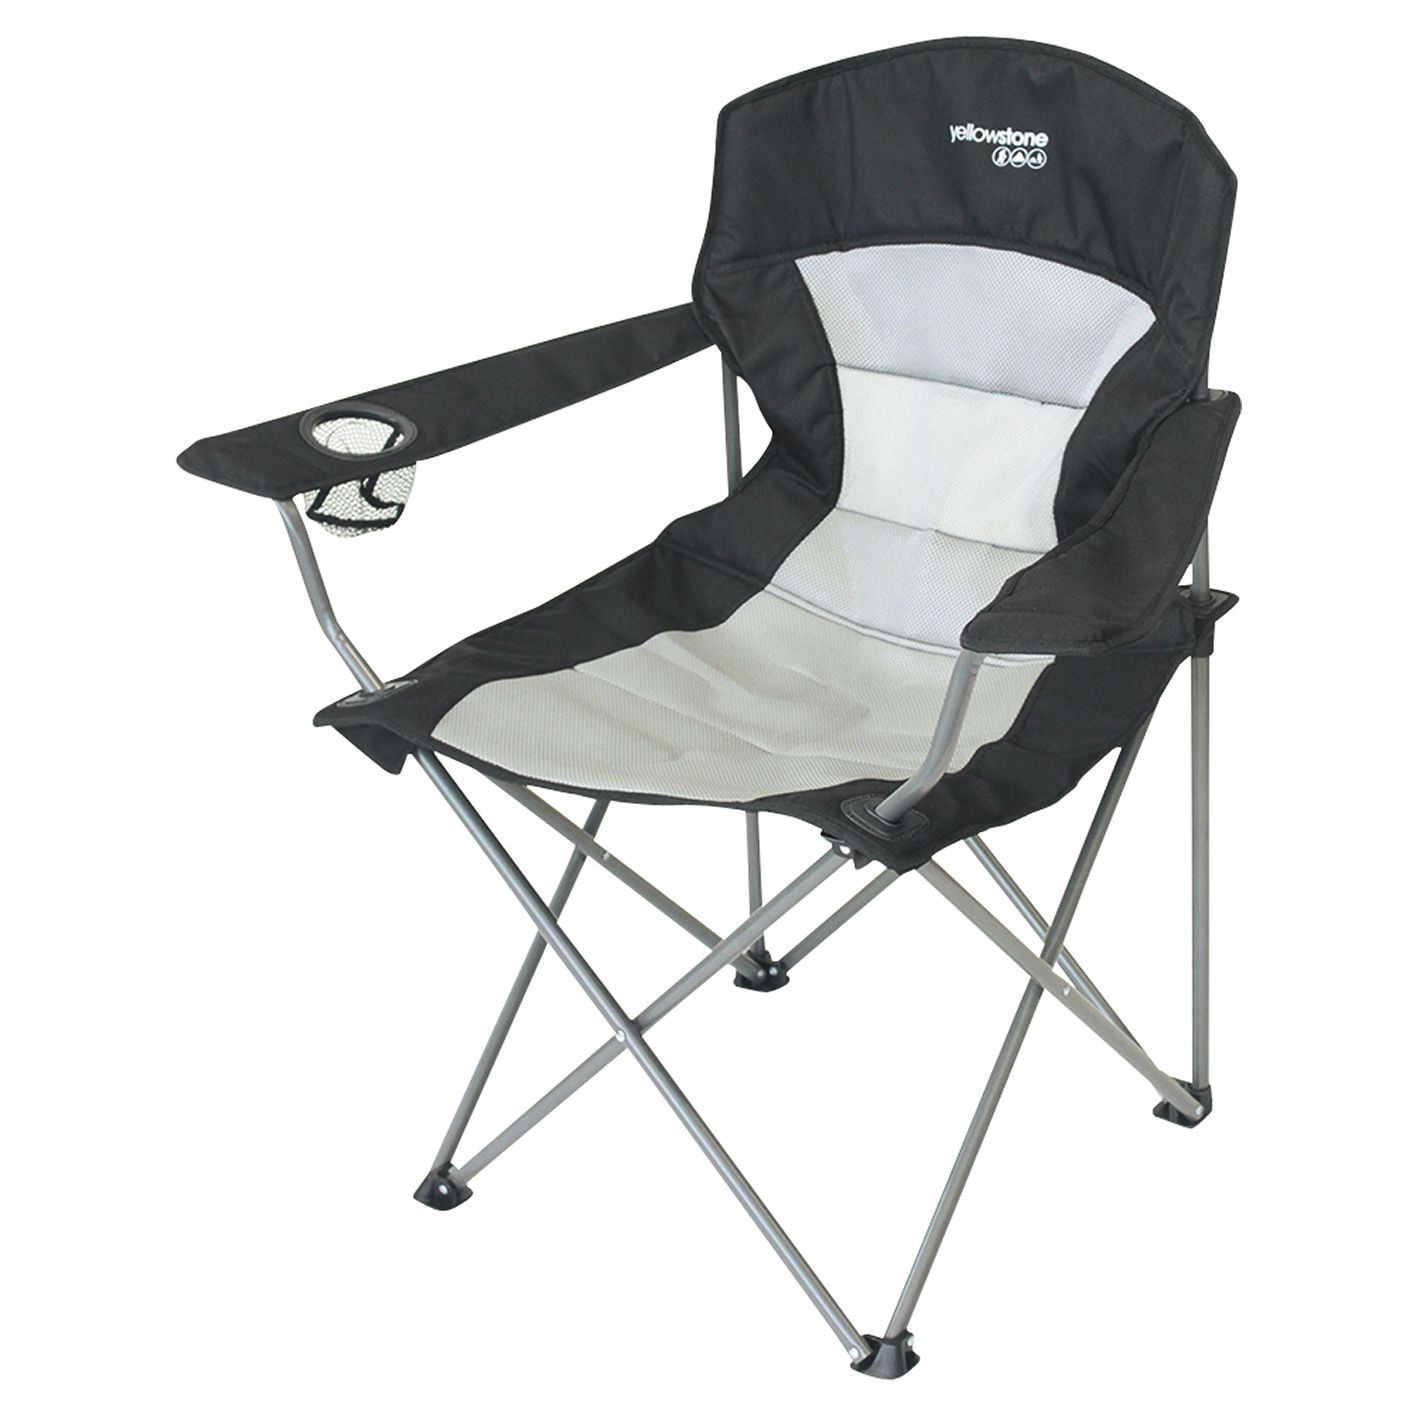 yellowstone camping chairs